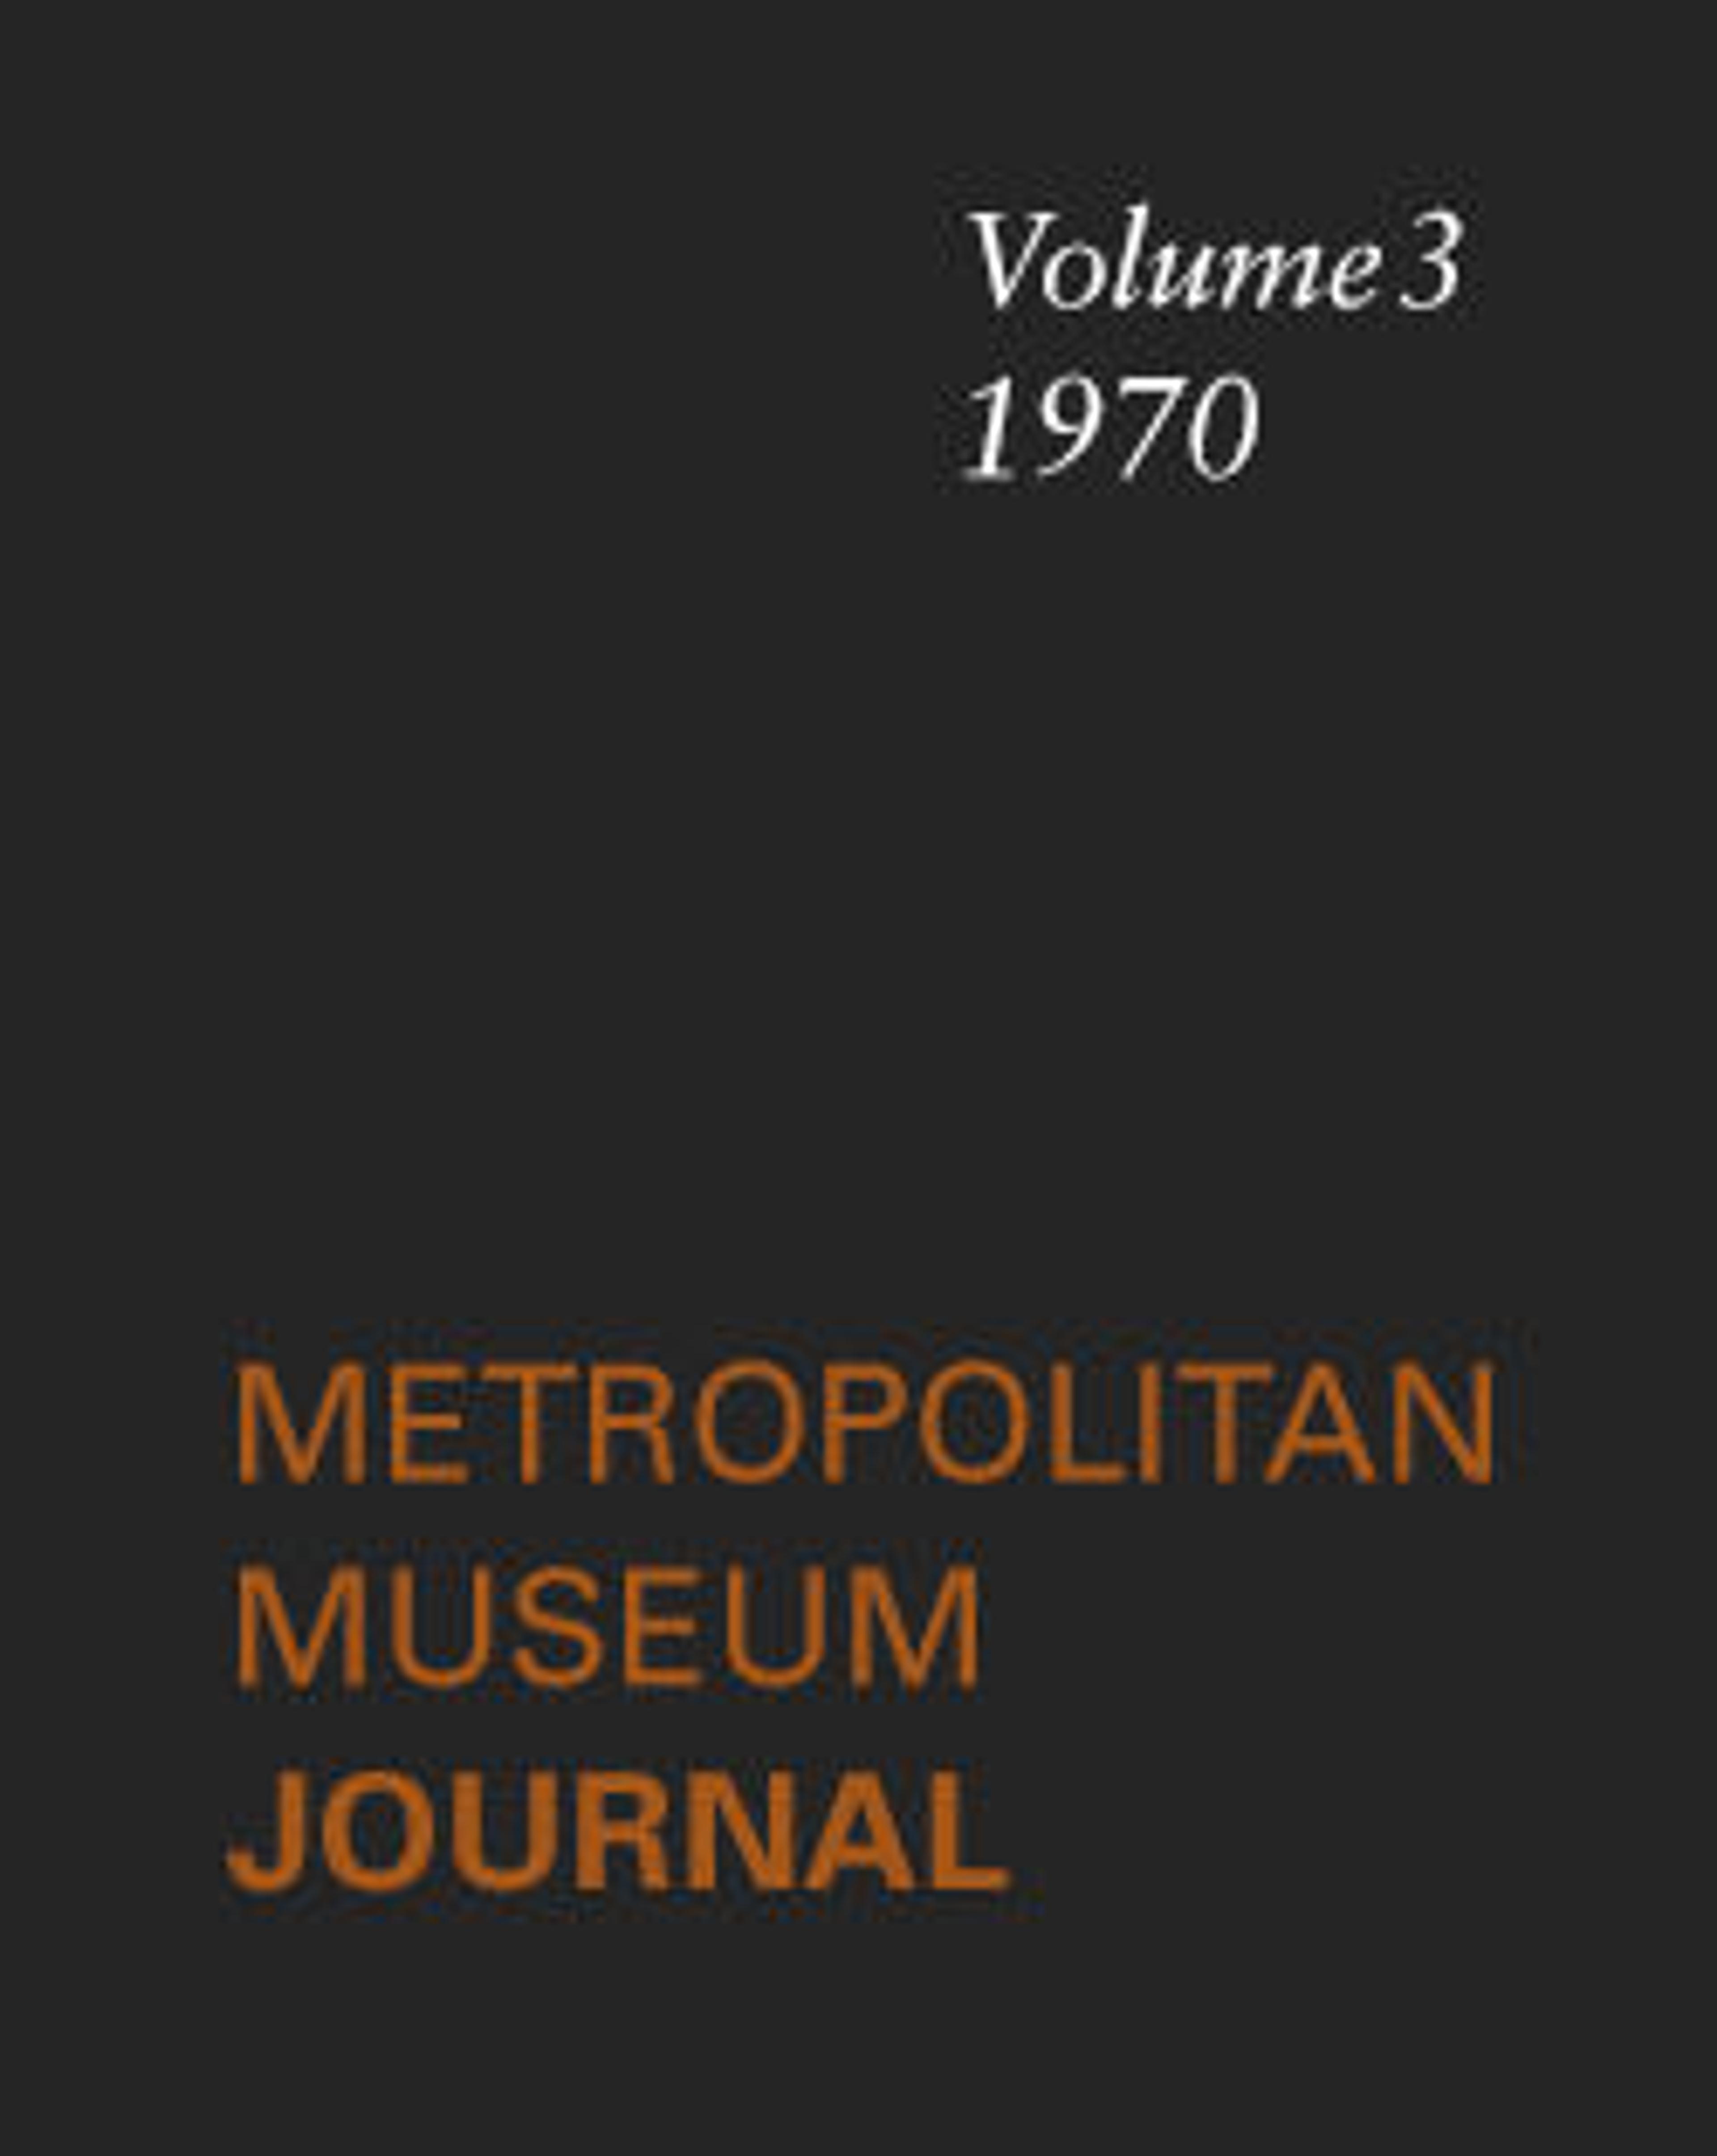 The Metropolitan Museum Journal, v. 3 (1970)